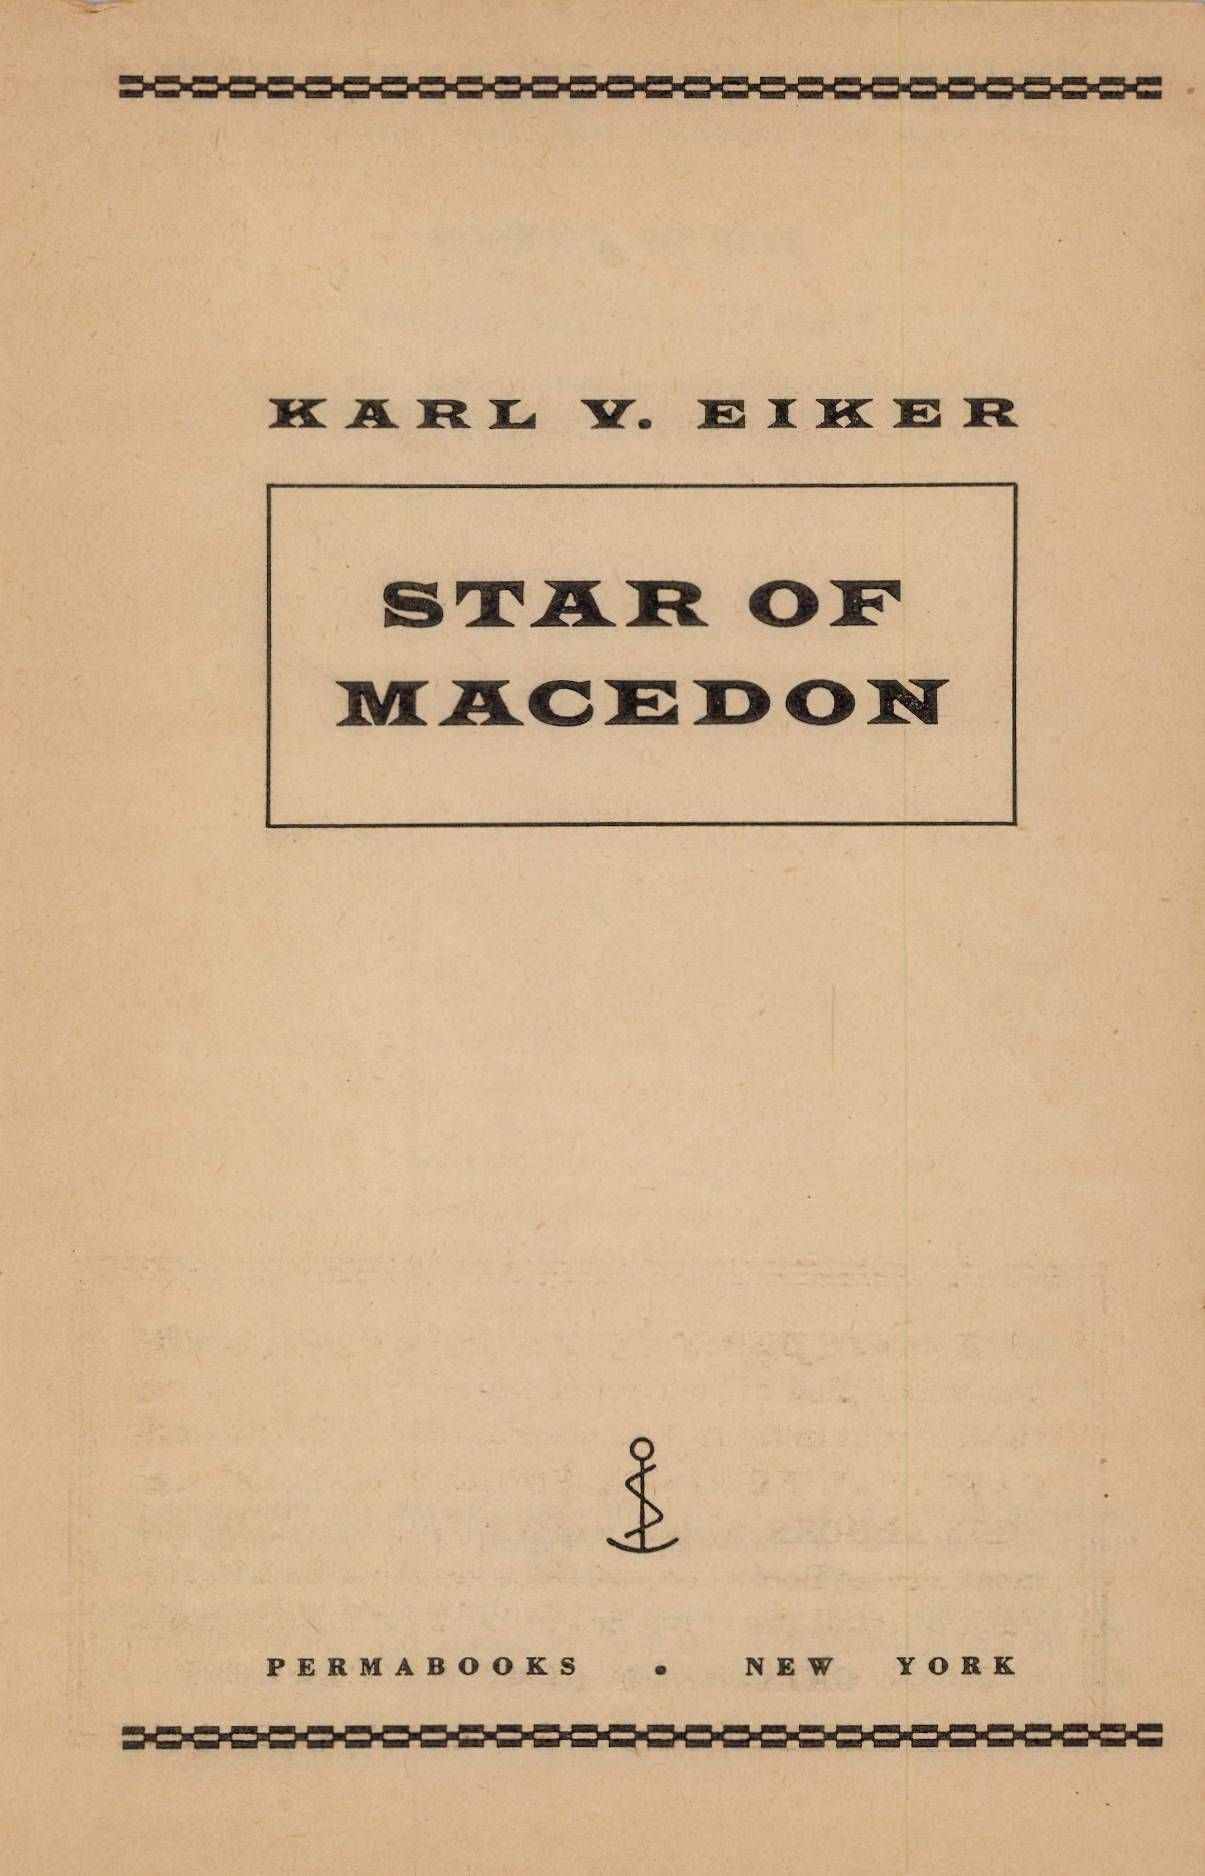 Star of Macedon by Karl V Eiker page 004.jpg